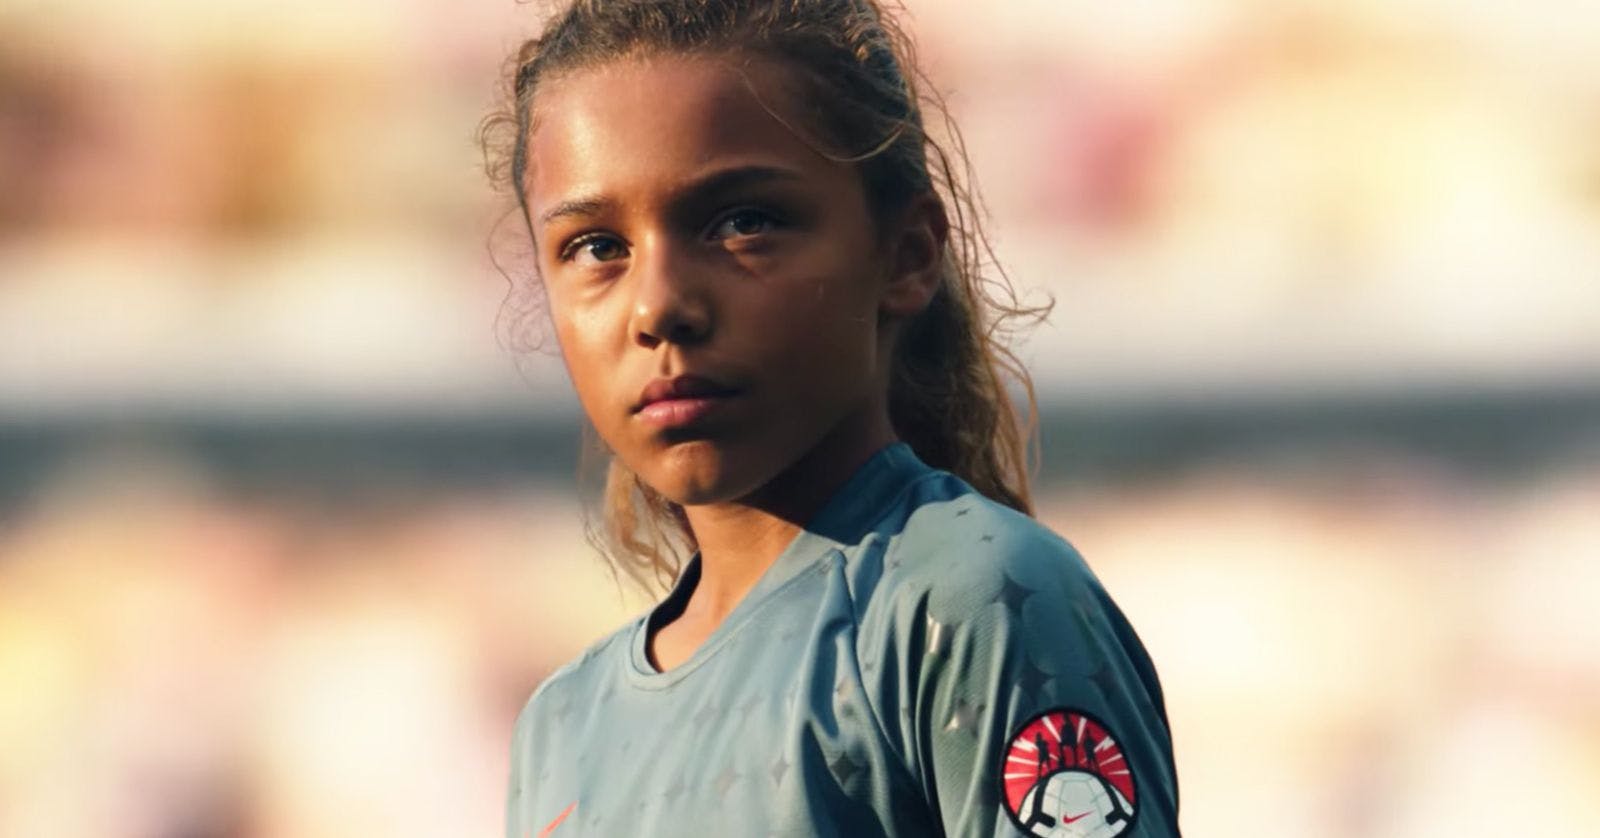 Women's World Cup Watch empowering Nike advert